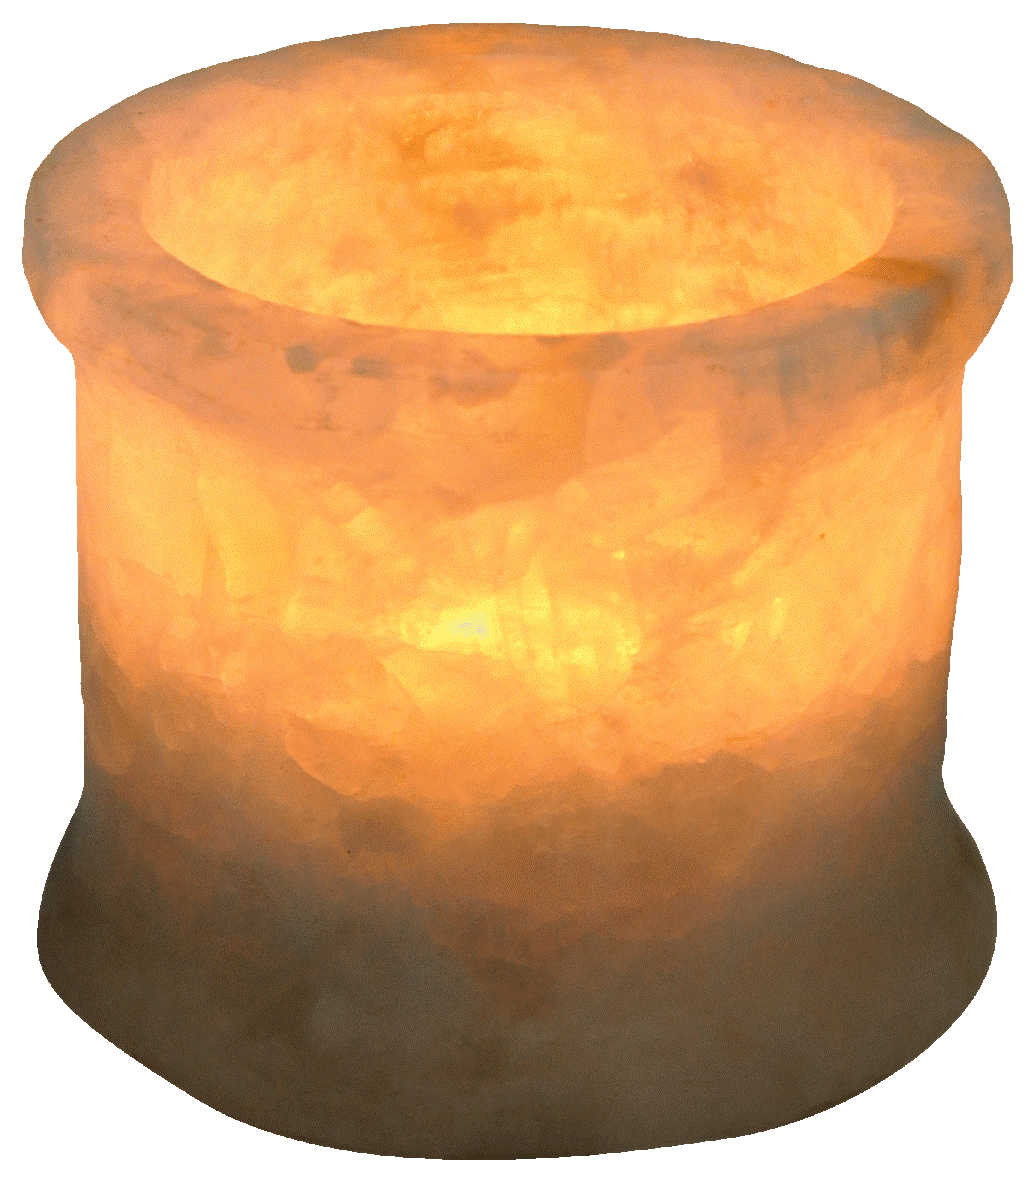 Egyptian Soft white alabaster stone hand carved candle holder votive